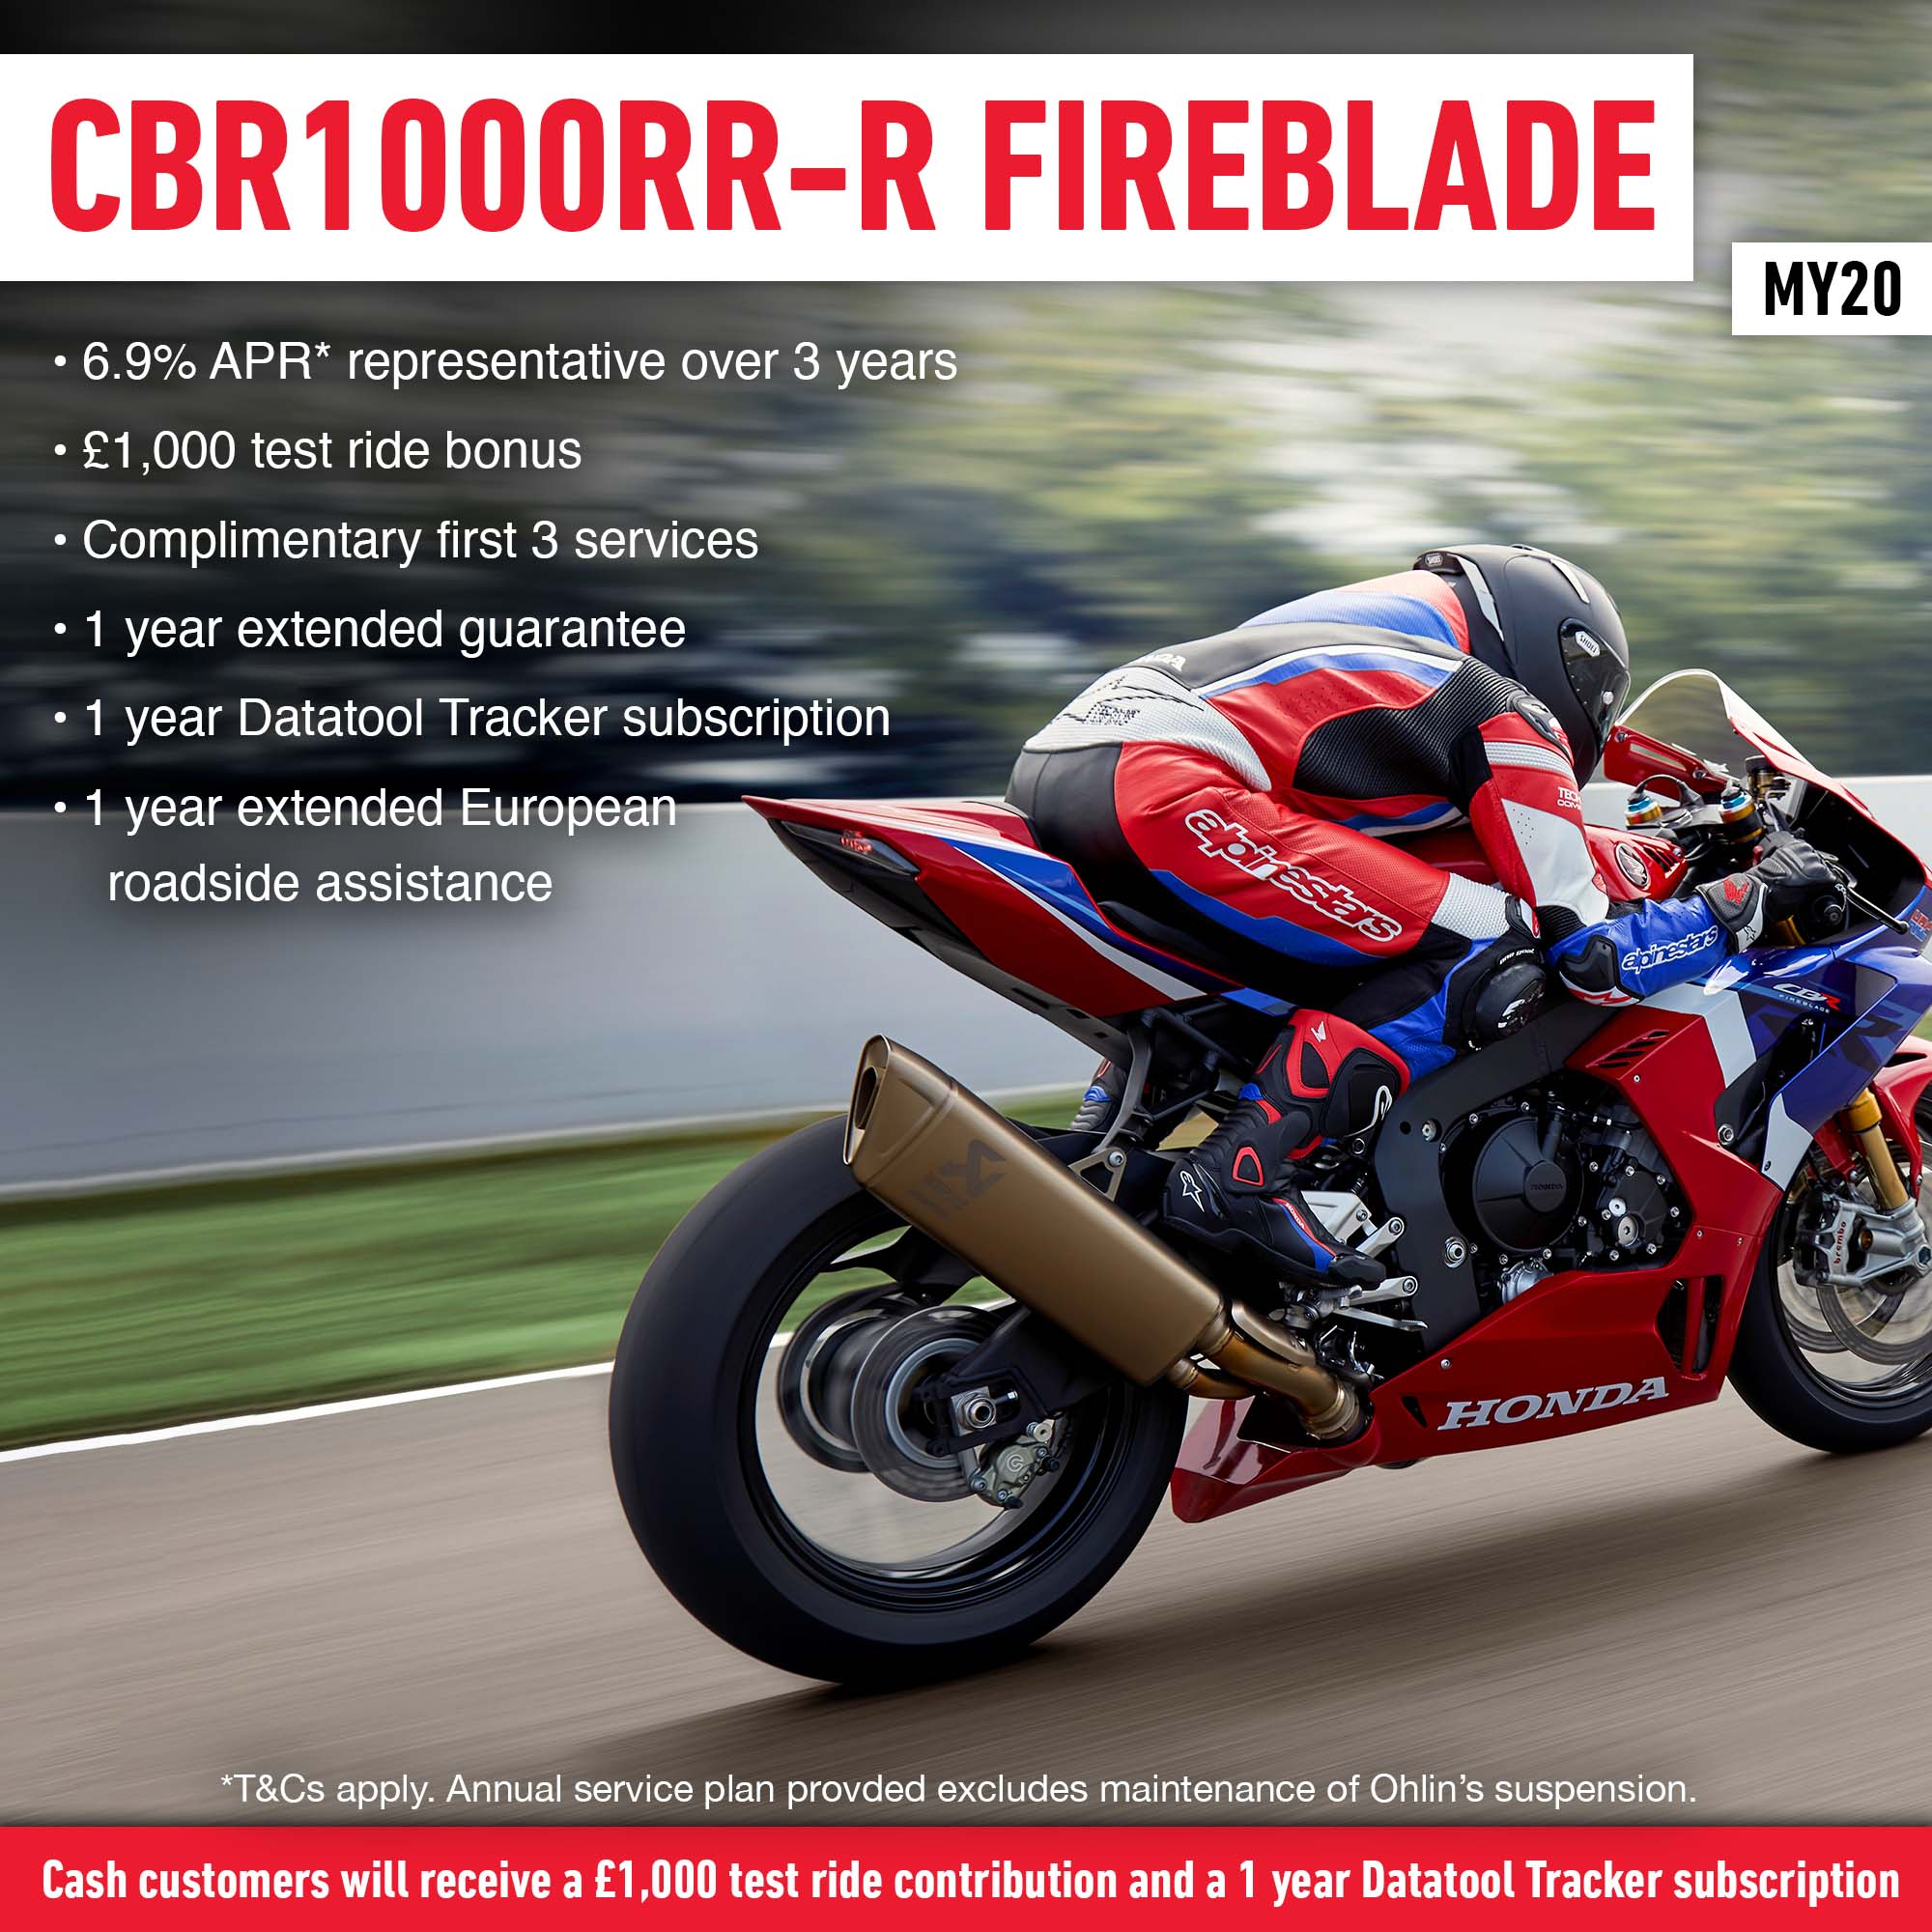 Brand new Honda finance offers on the CBR1000RR-R Fireblade MY20